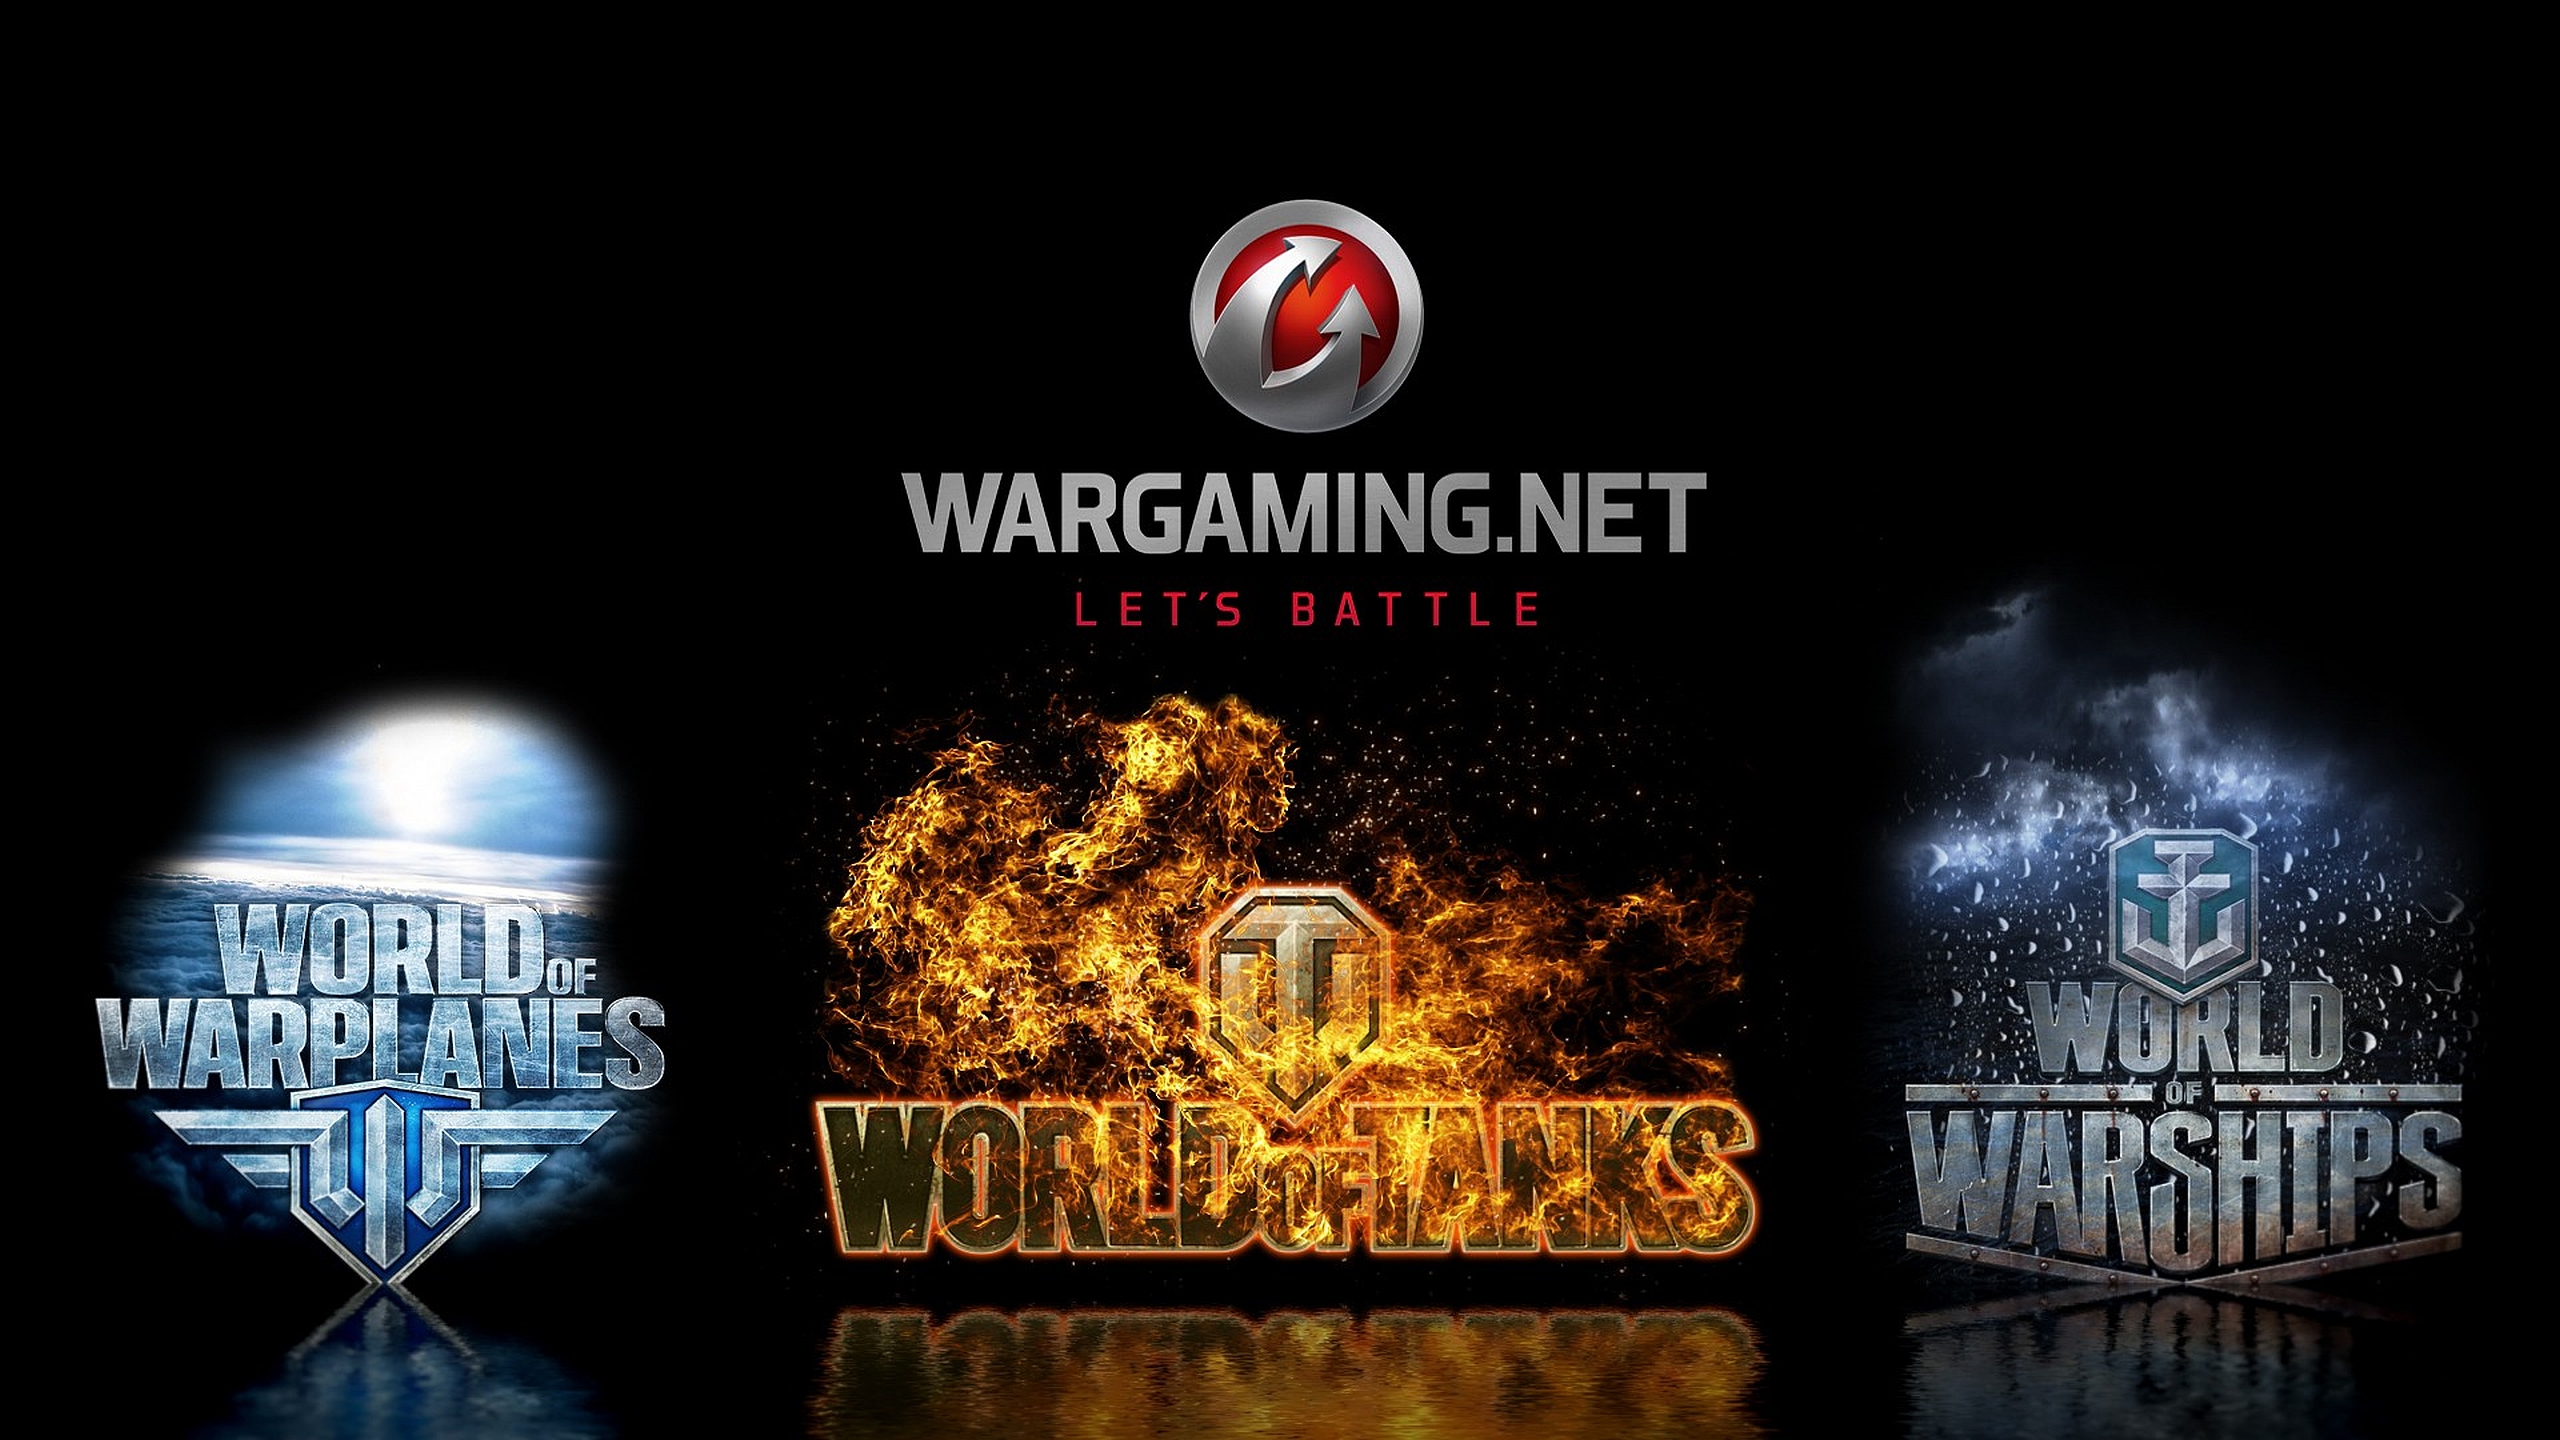 1 Wargaming.net HD Wallpapers | Backgrounds - Wallpaper Abyss - 2560 x 1440 jpeg 1320kB